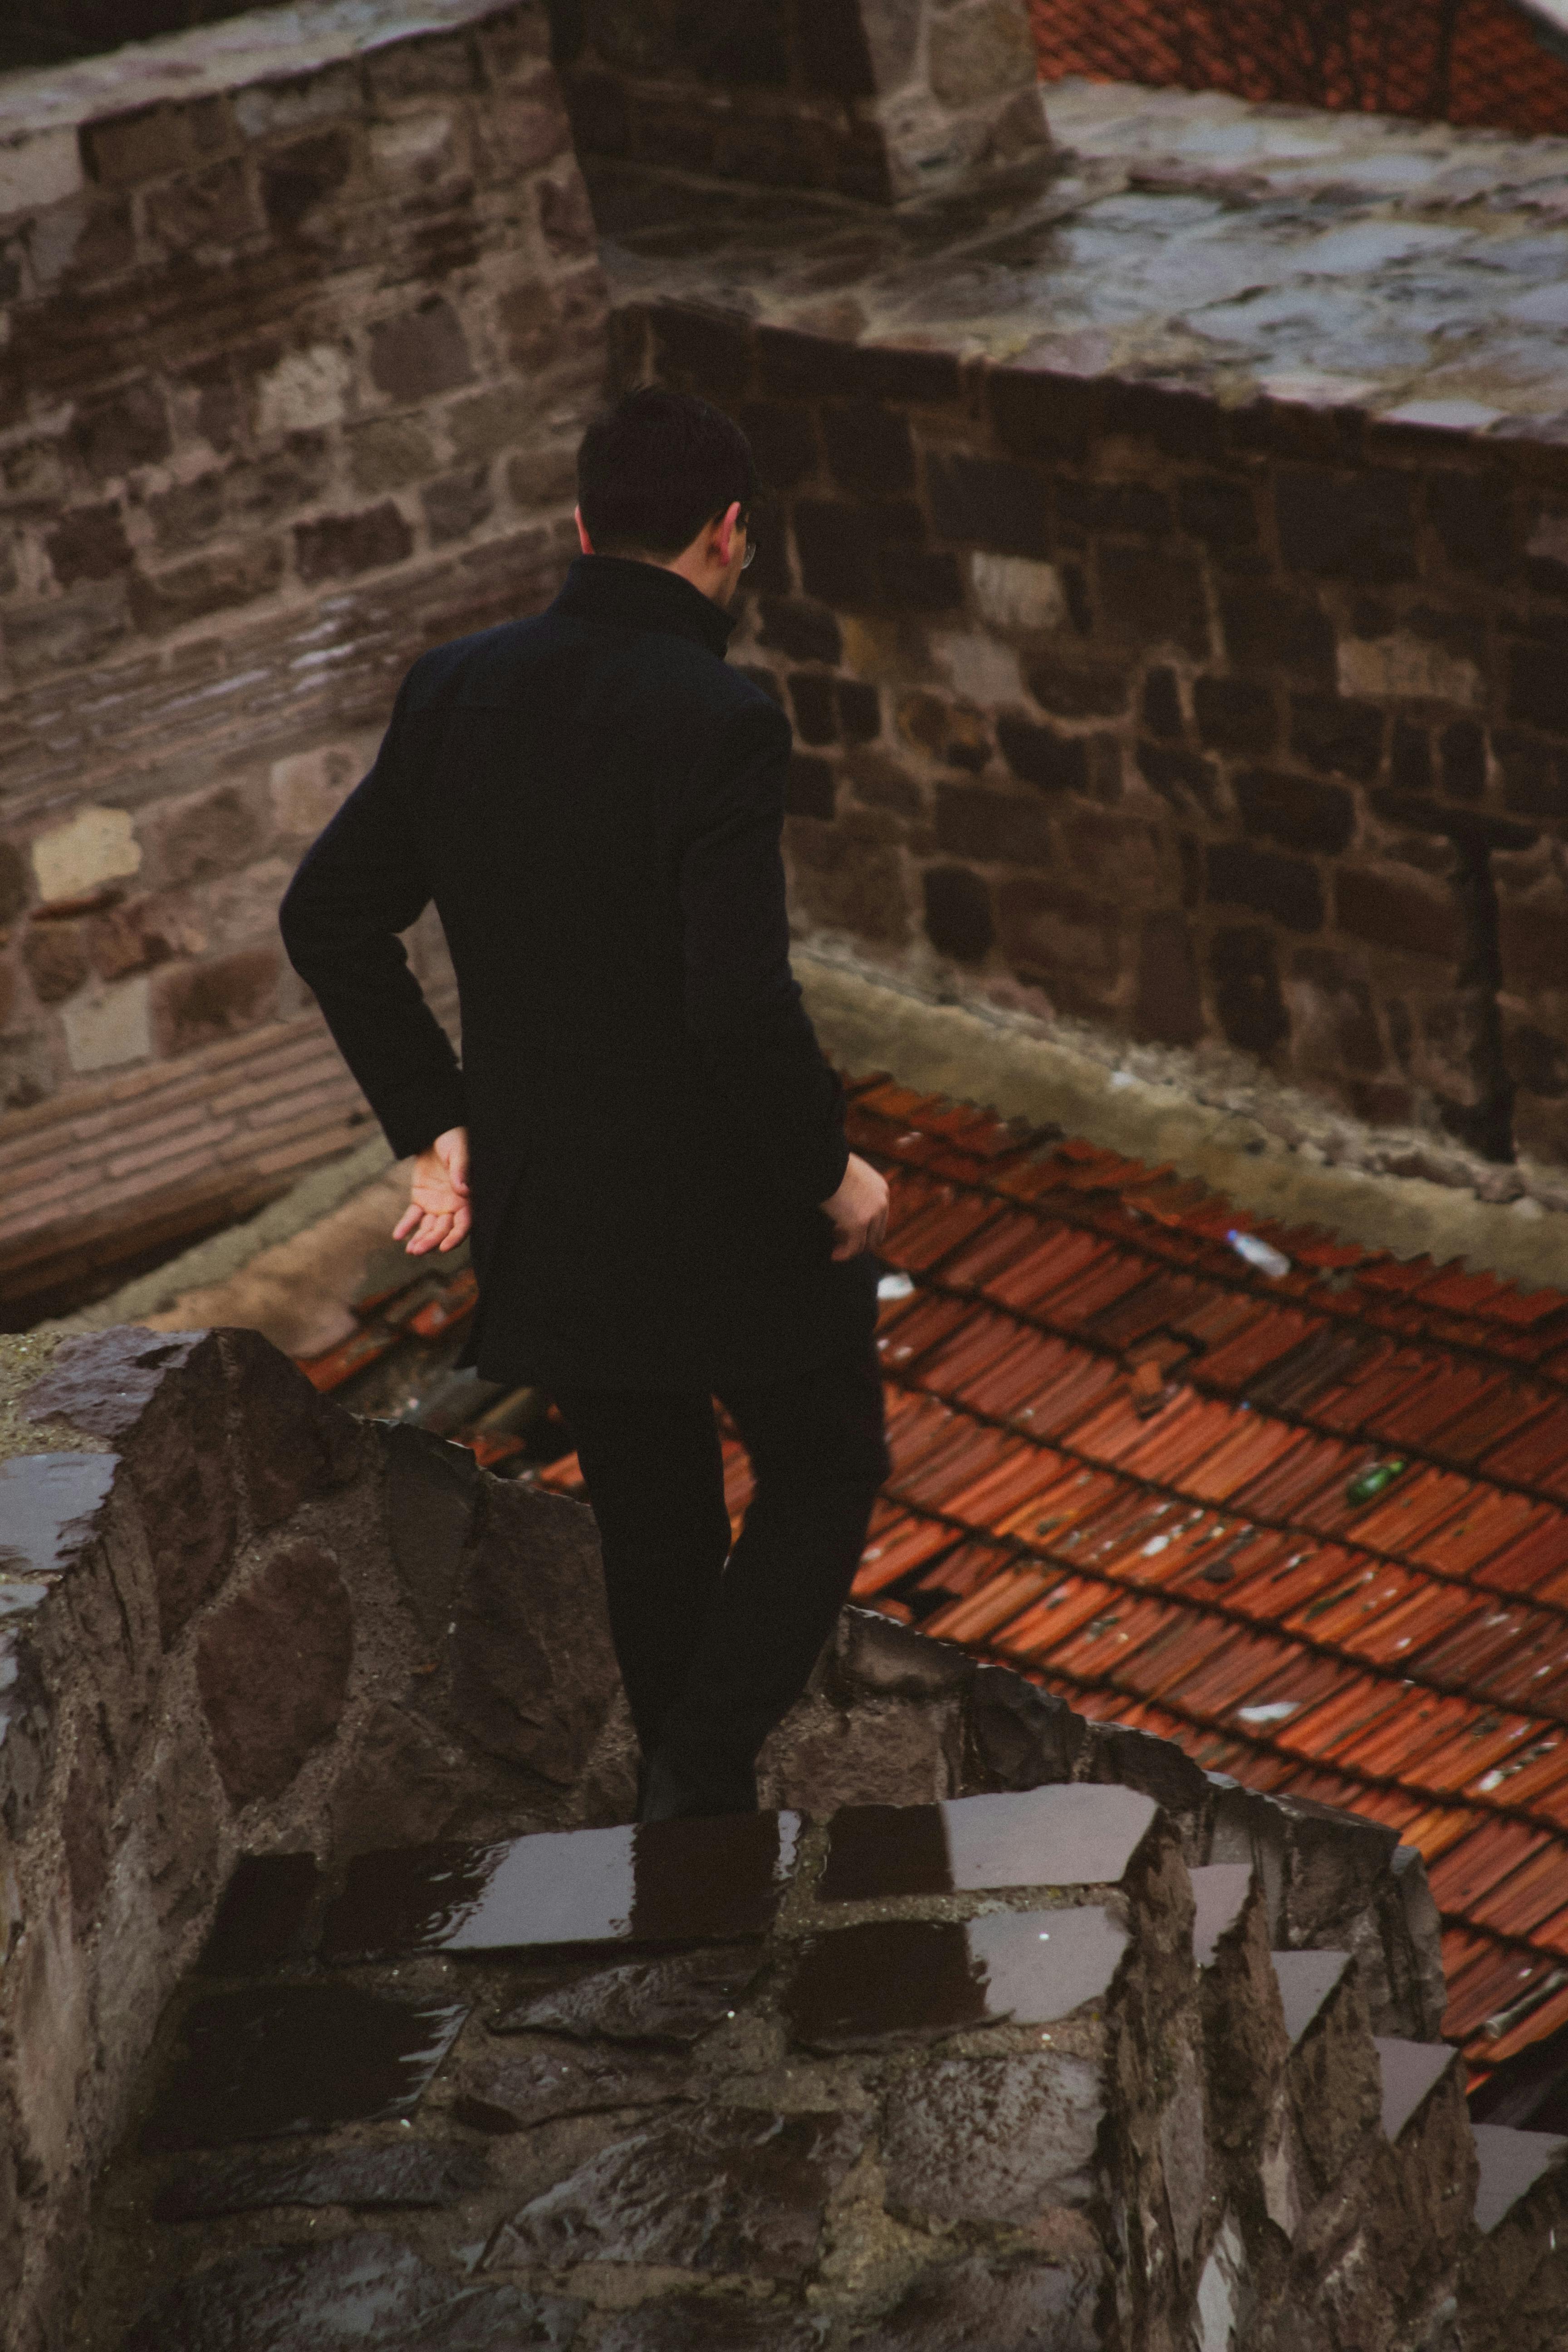 A man walking down the stone steps | Source: Pexels